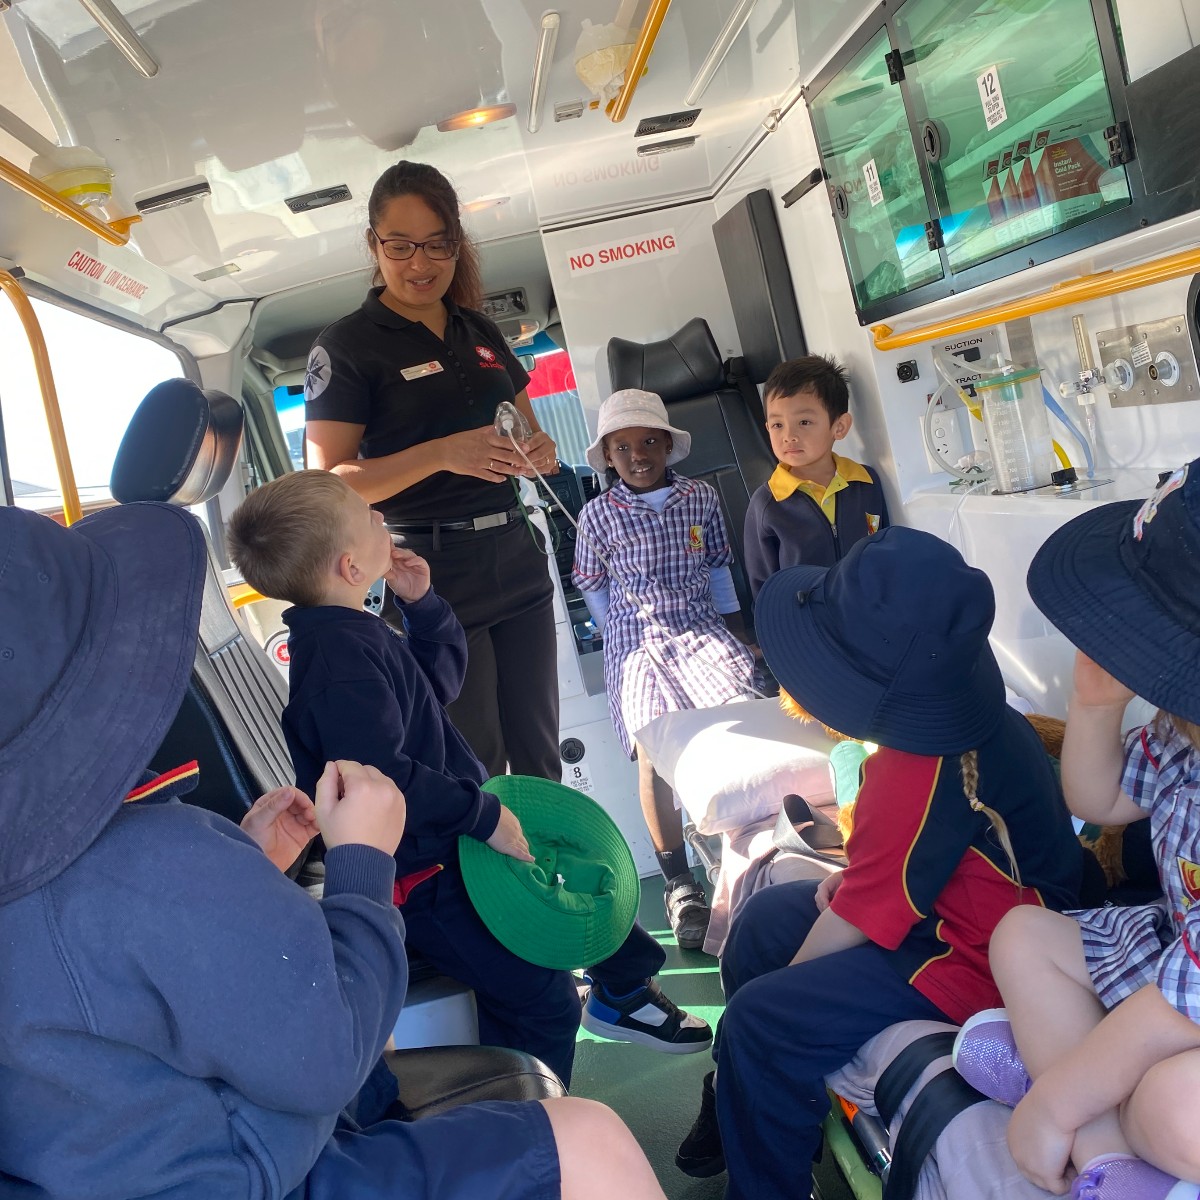 Thank you @HIF_Australia for the generous contribution to the St John WA First Aid Focus program. Helping us teach life-saving skills to school children across WA and strengthening our communities. 
brnw.ch/21wKaDD